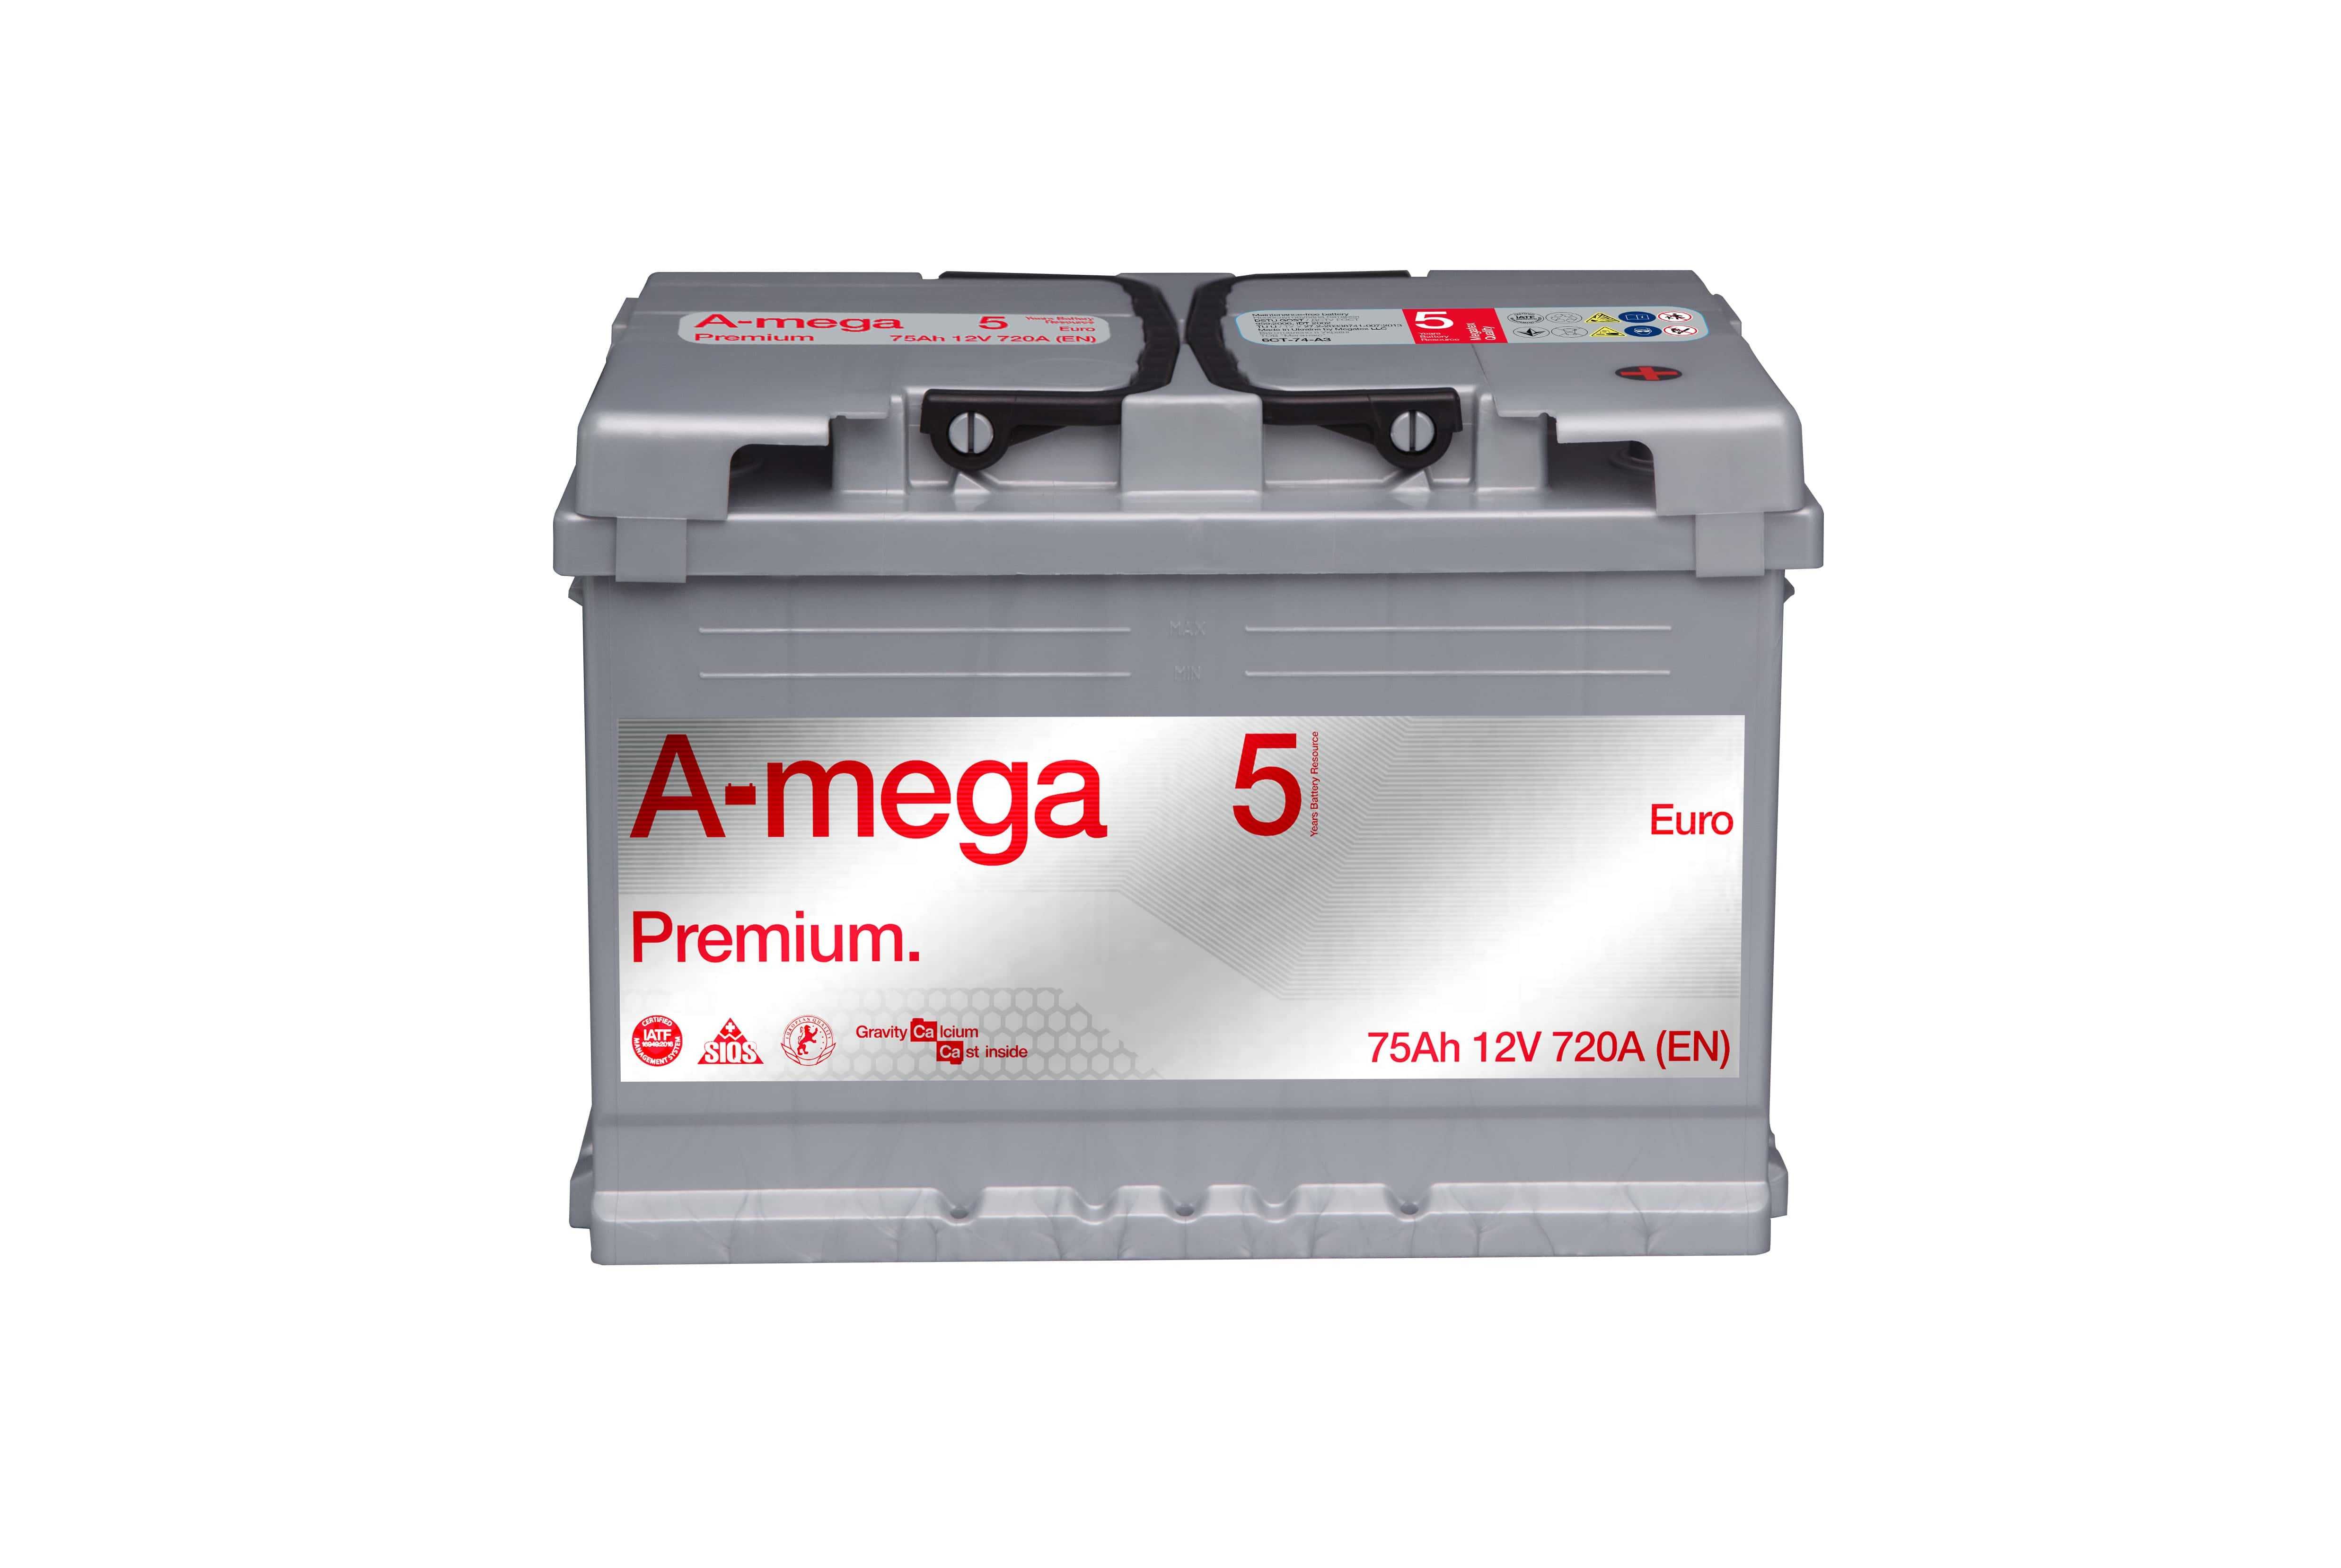 Akumulator 12V 75Ah Amega Premium 5 Megatex Kielce-dowóz gratis!